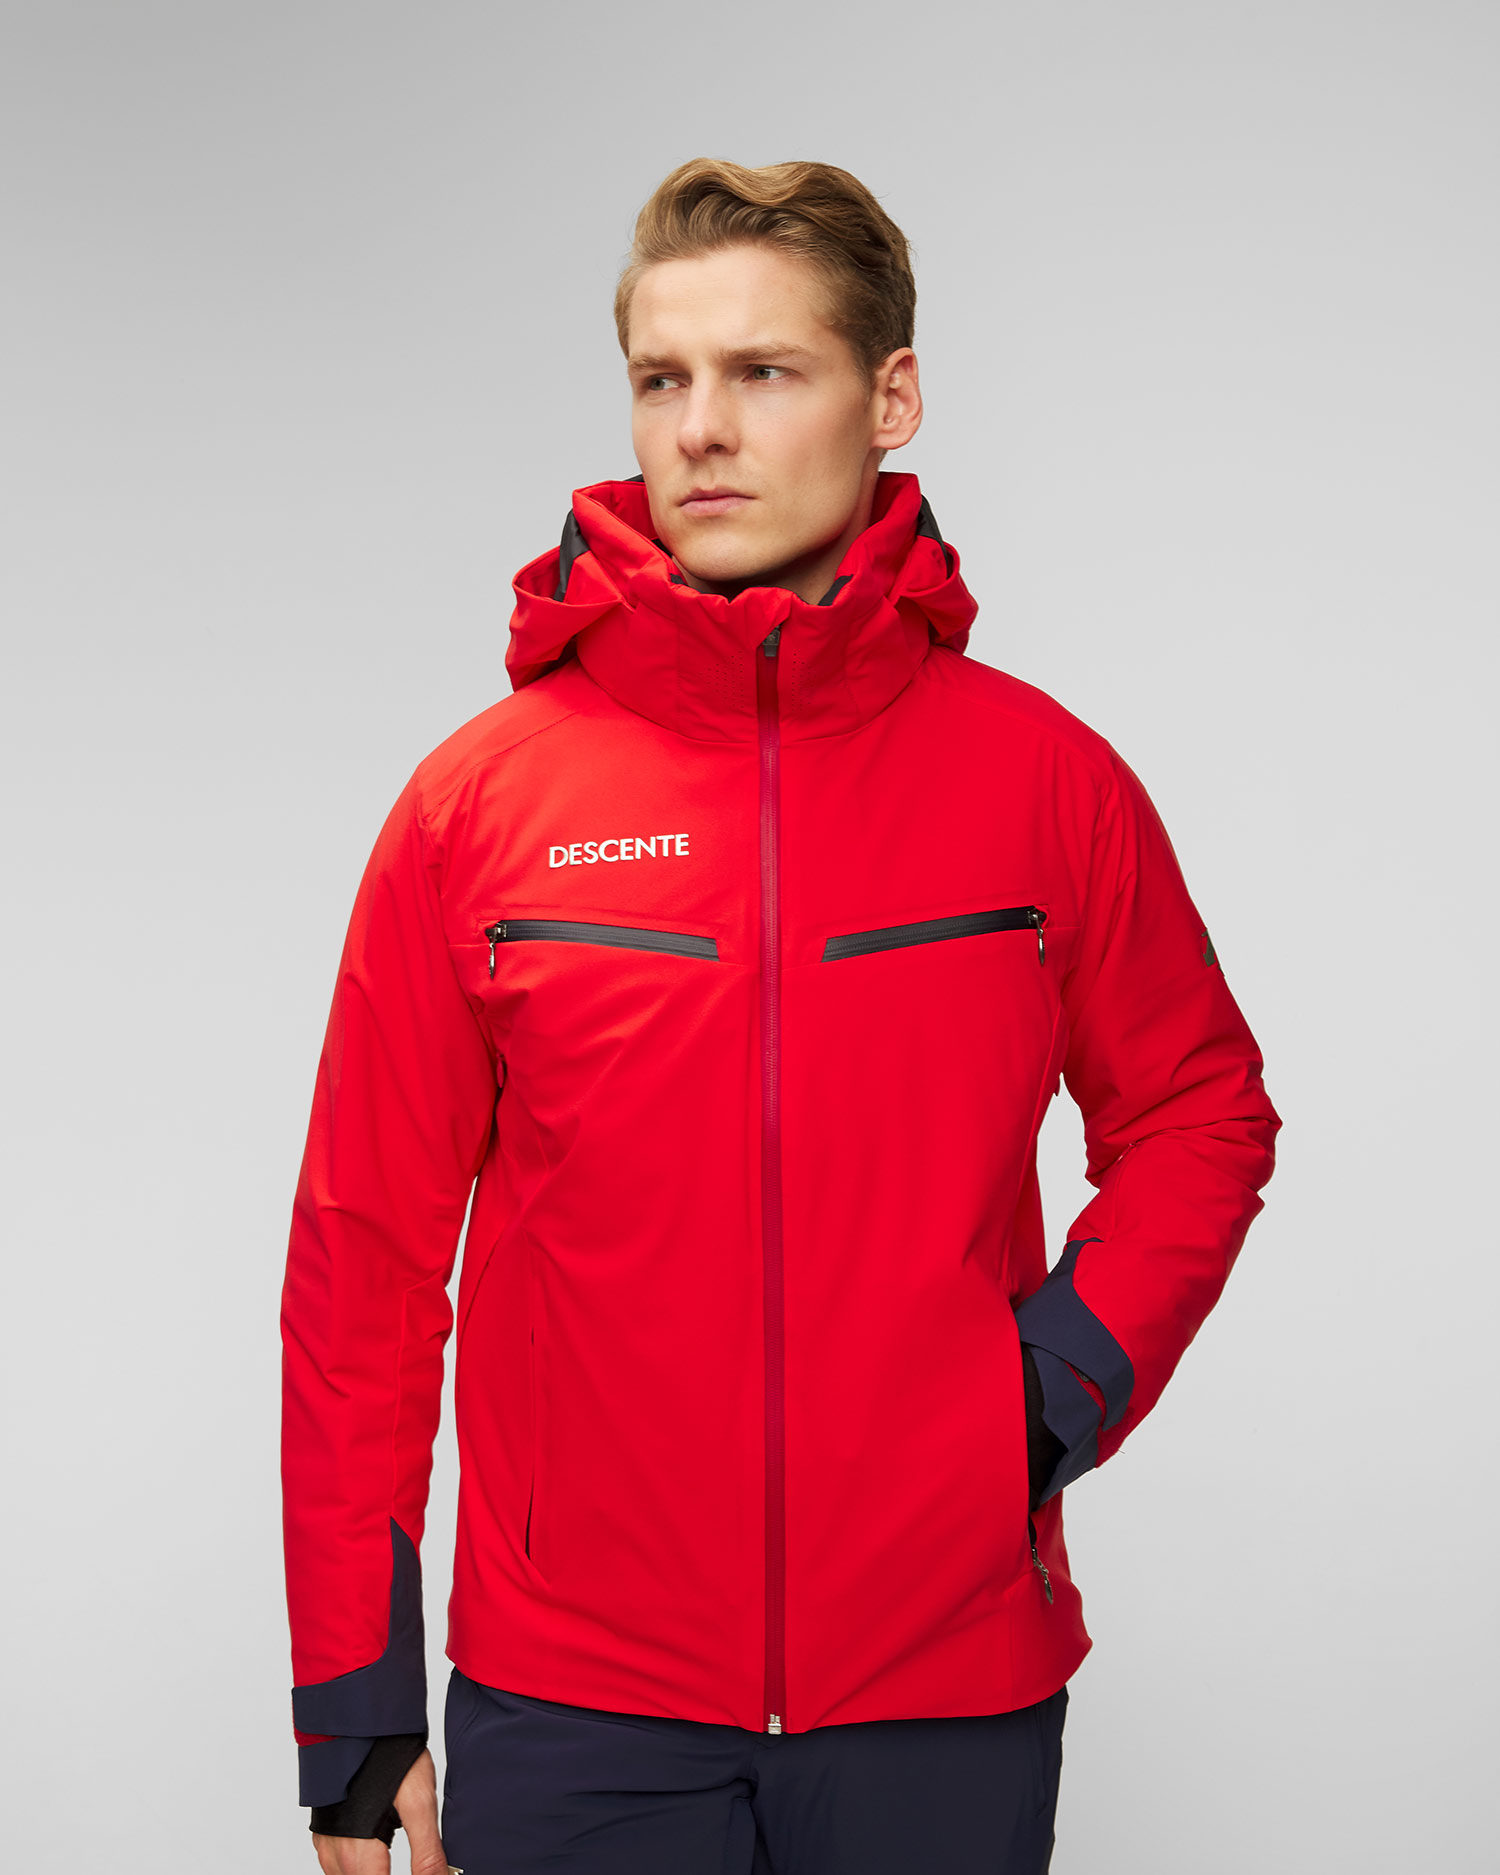 Men's ski jacket Descente Tracy DWMWGK30-erd | S'portofino